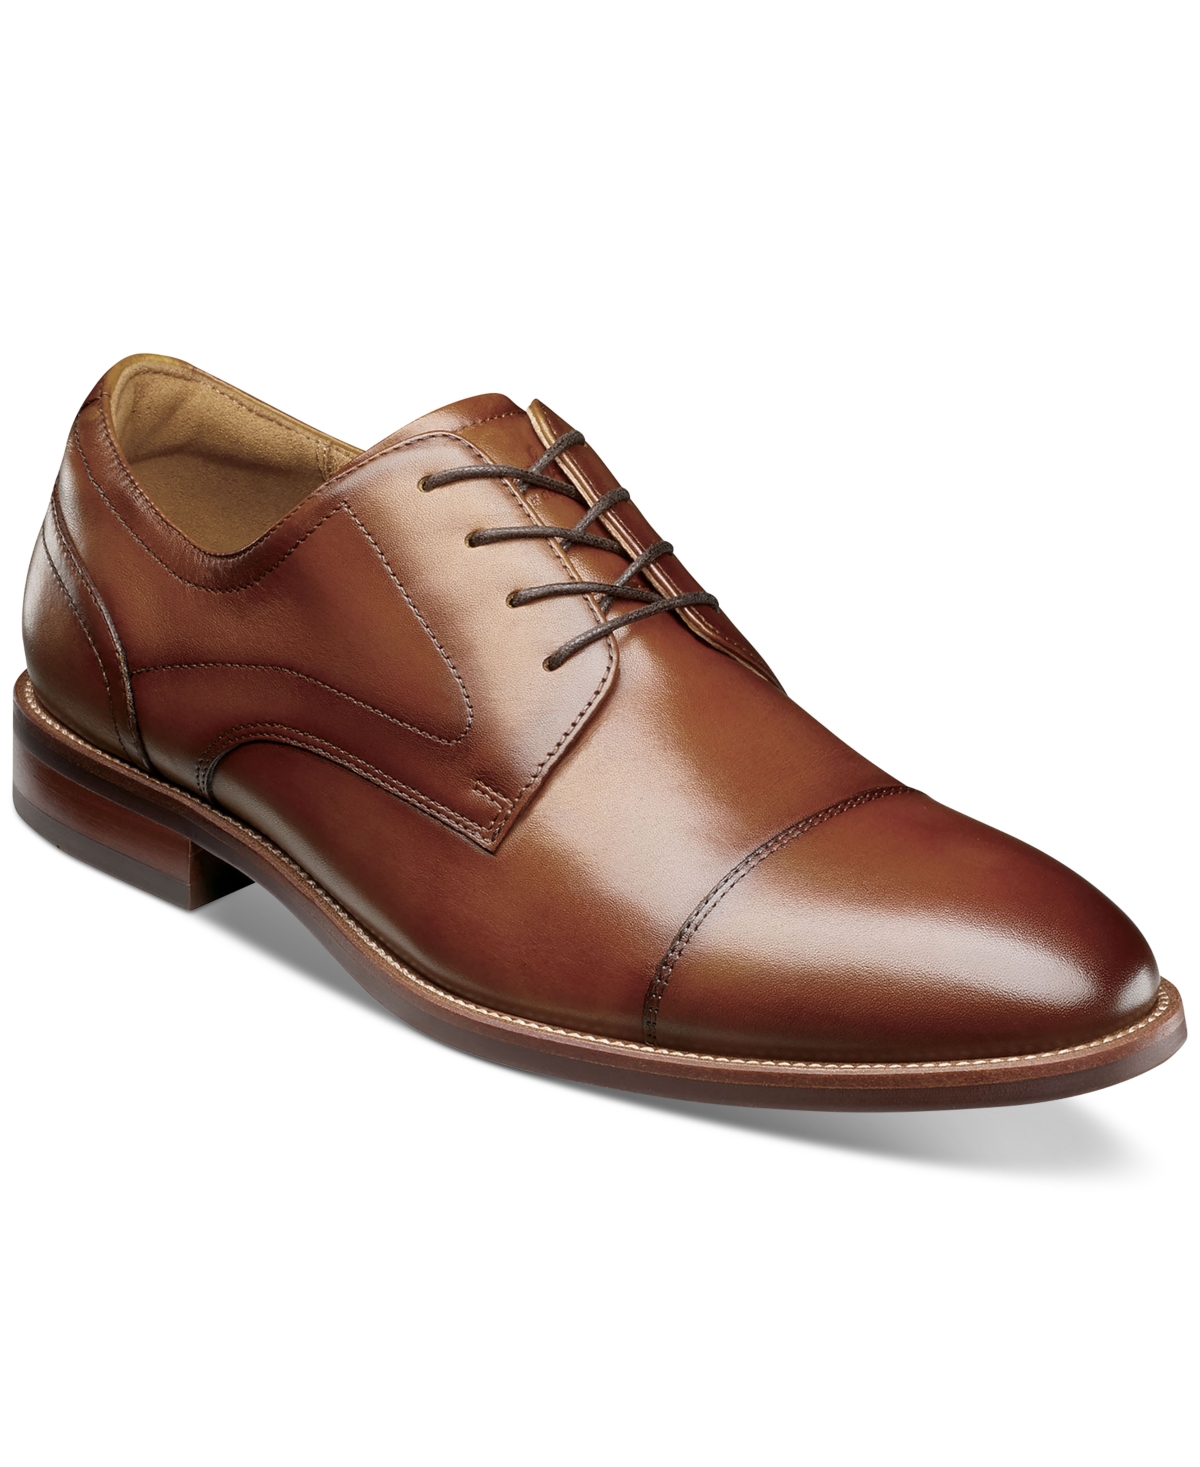 Men's Ruvo Cap-Toe Oxford Dress Shoe - Cognac